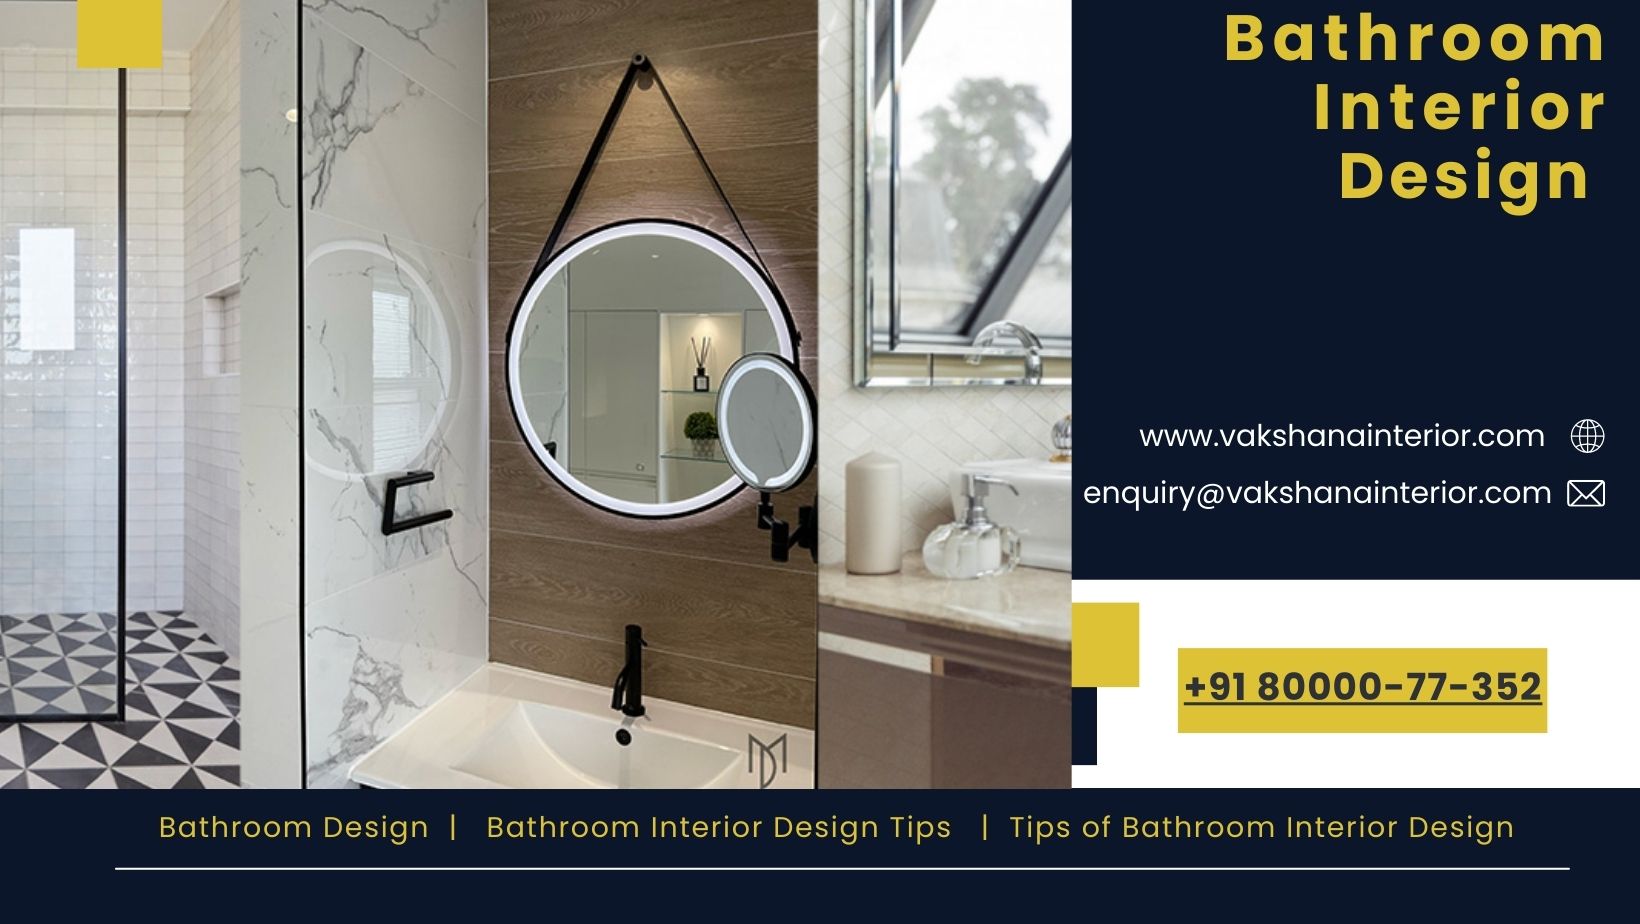 Design Tips for Bathrooms